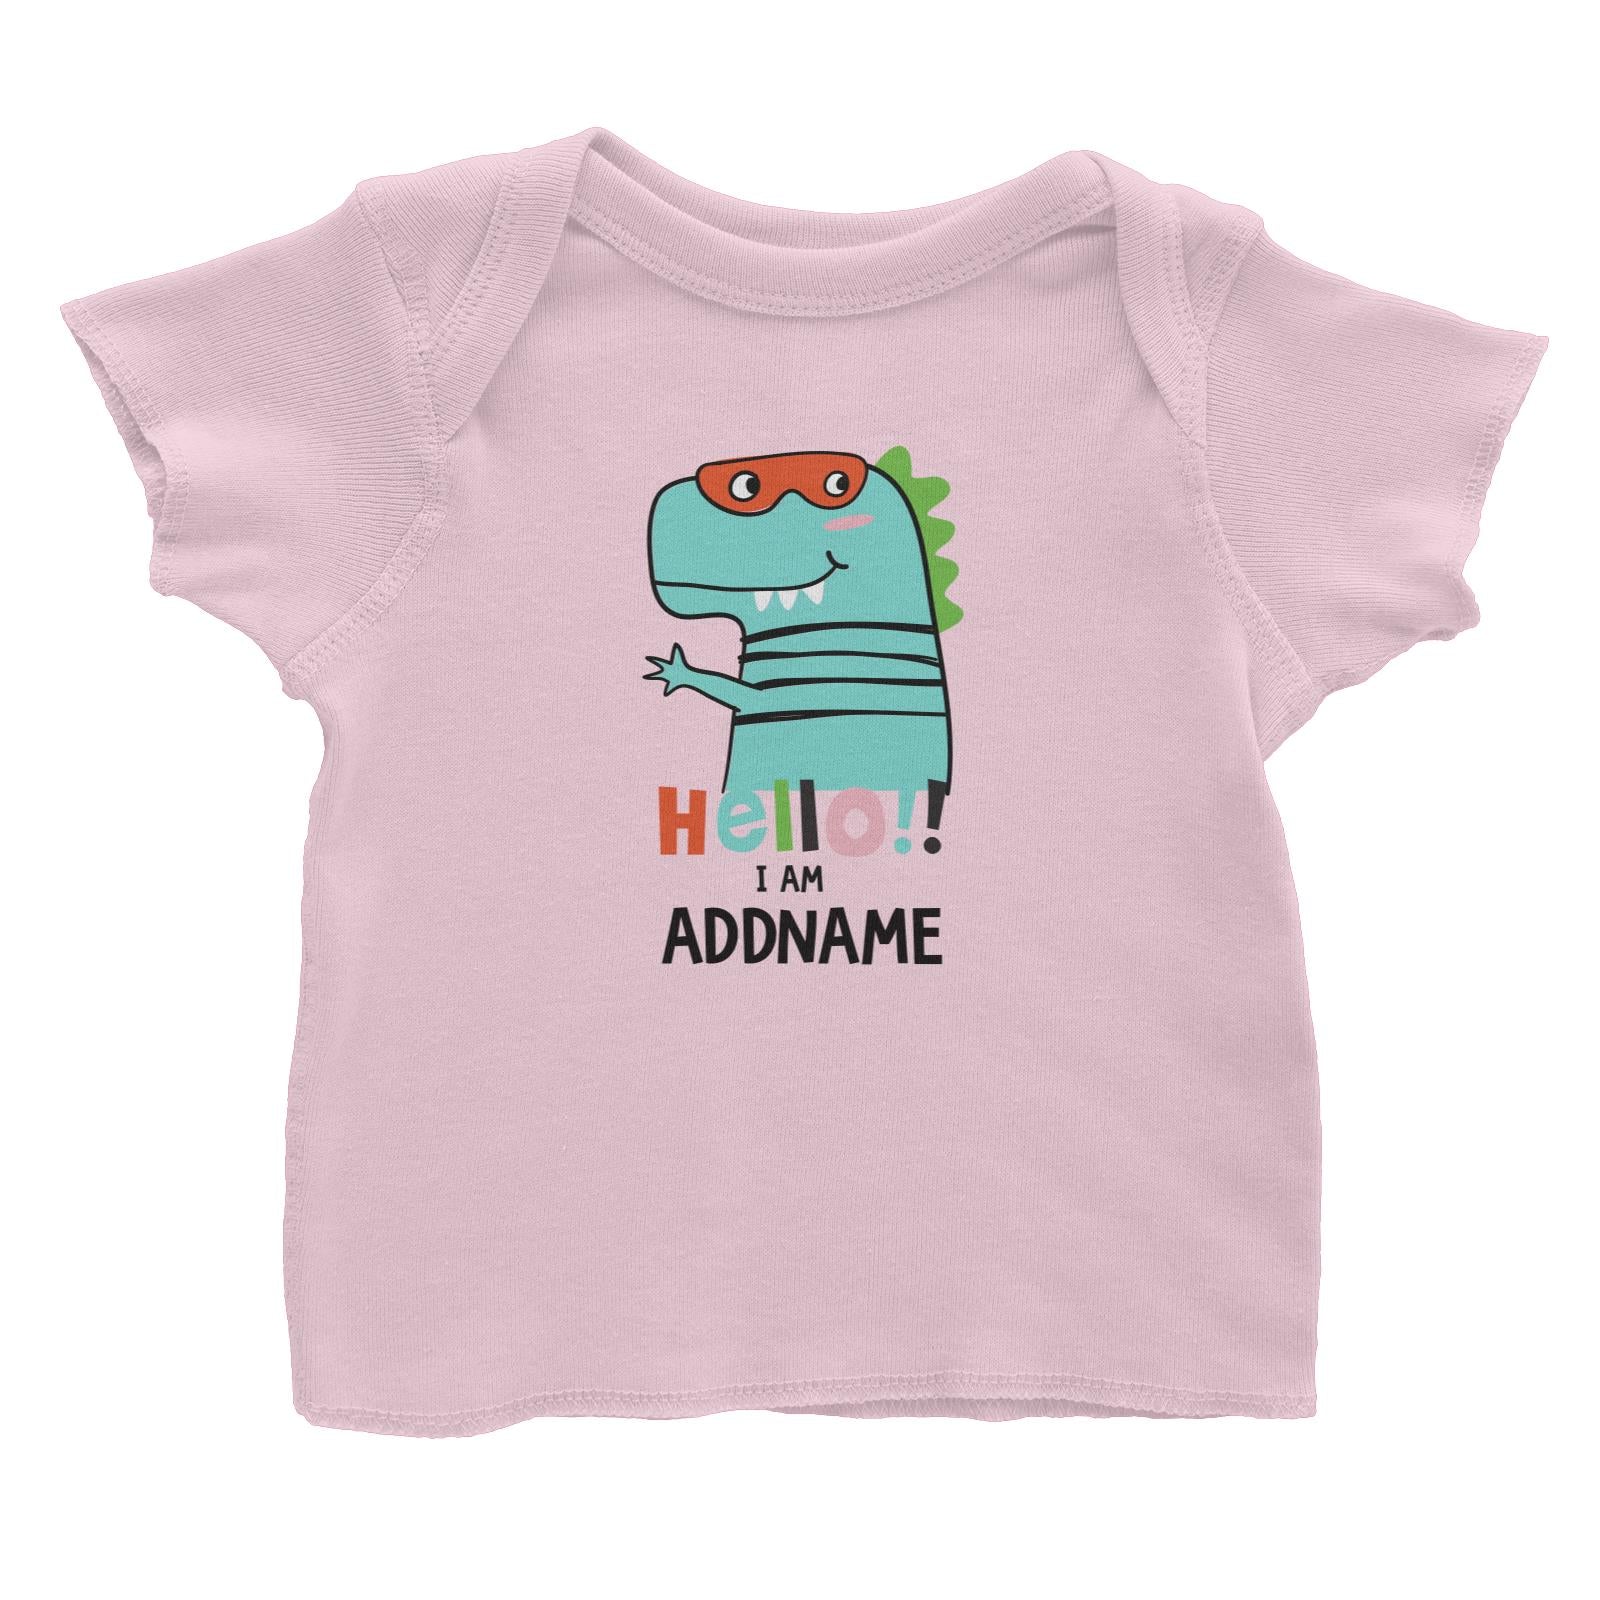 Cool Vibrant Series Hello I Am Dinosaur Addname Baby T-Shirt